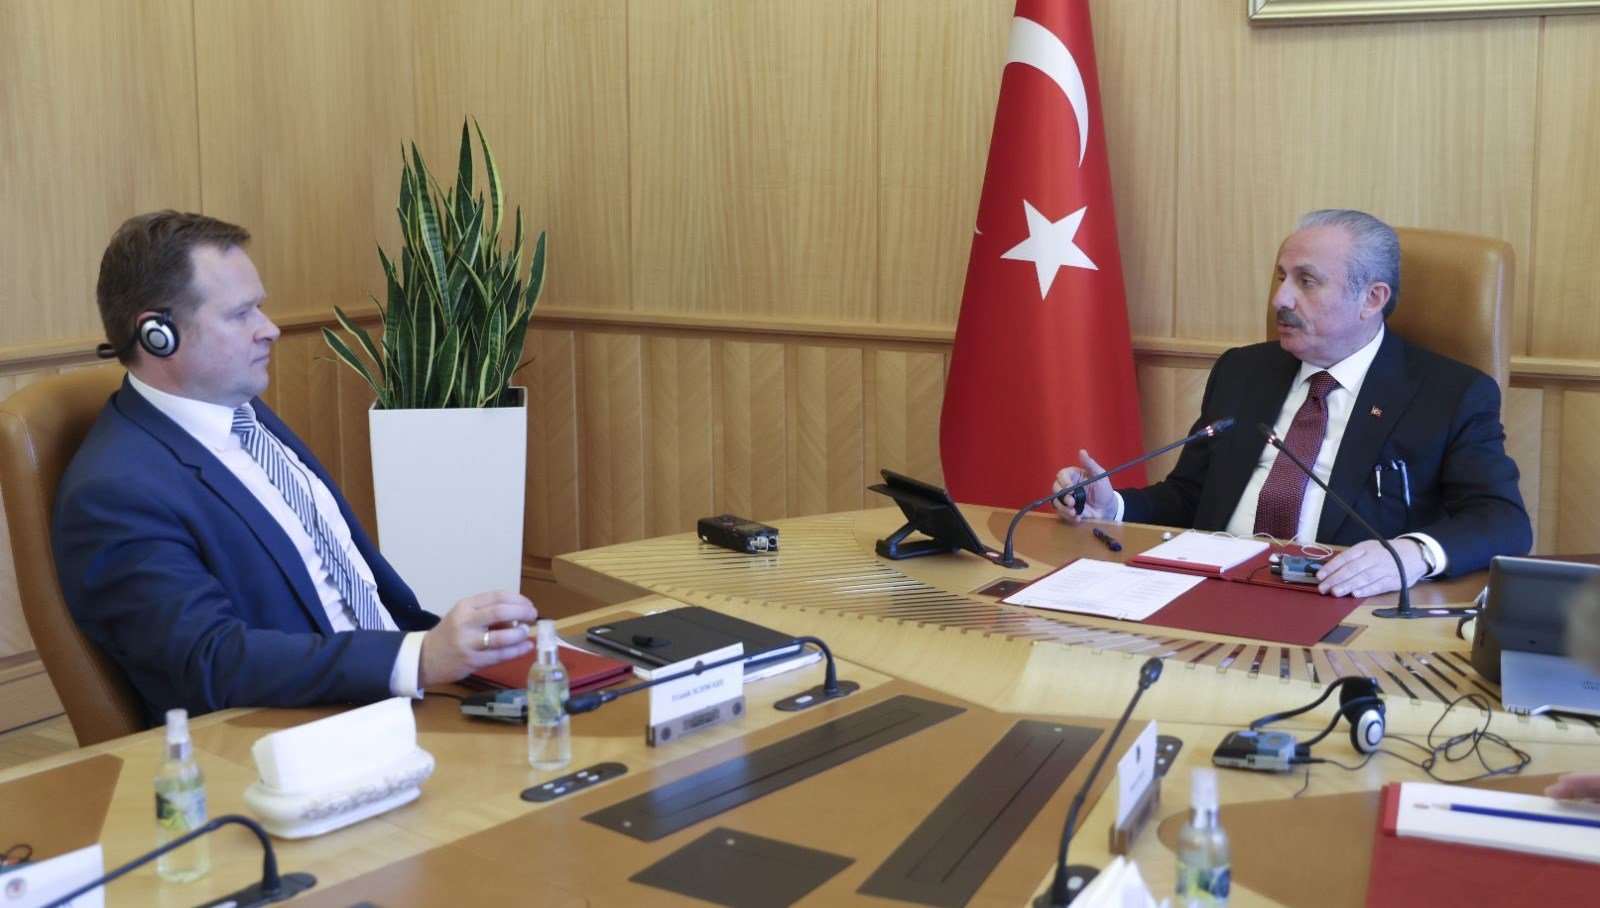 TBMM Başkanı Şentop’tan AKPM Heyeti Başkanı’na “14 Mayıs” tepkisi